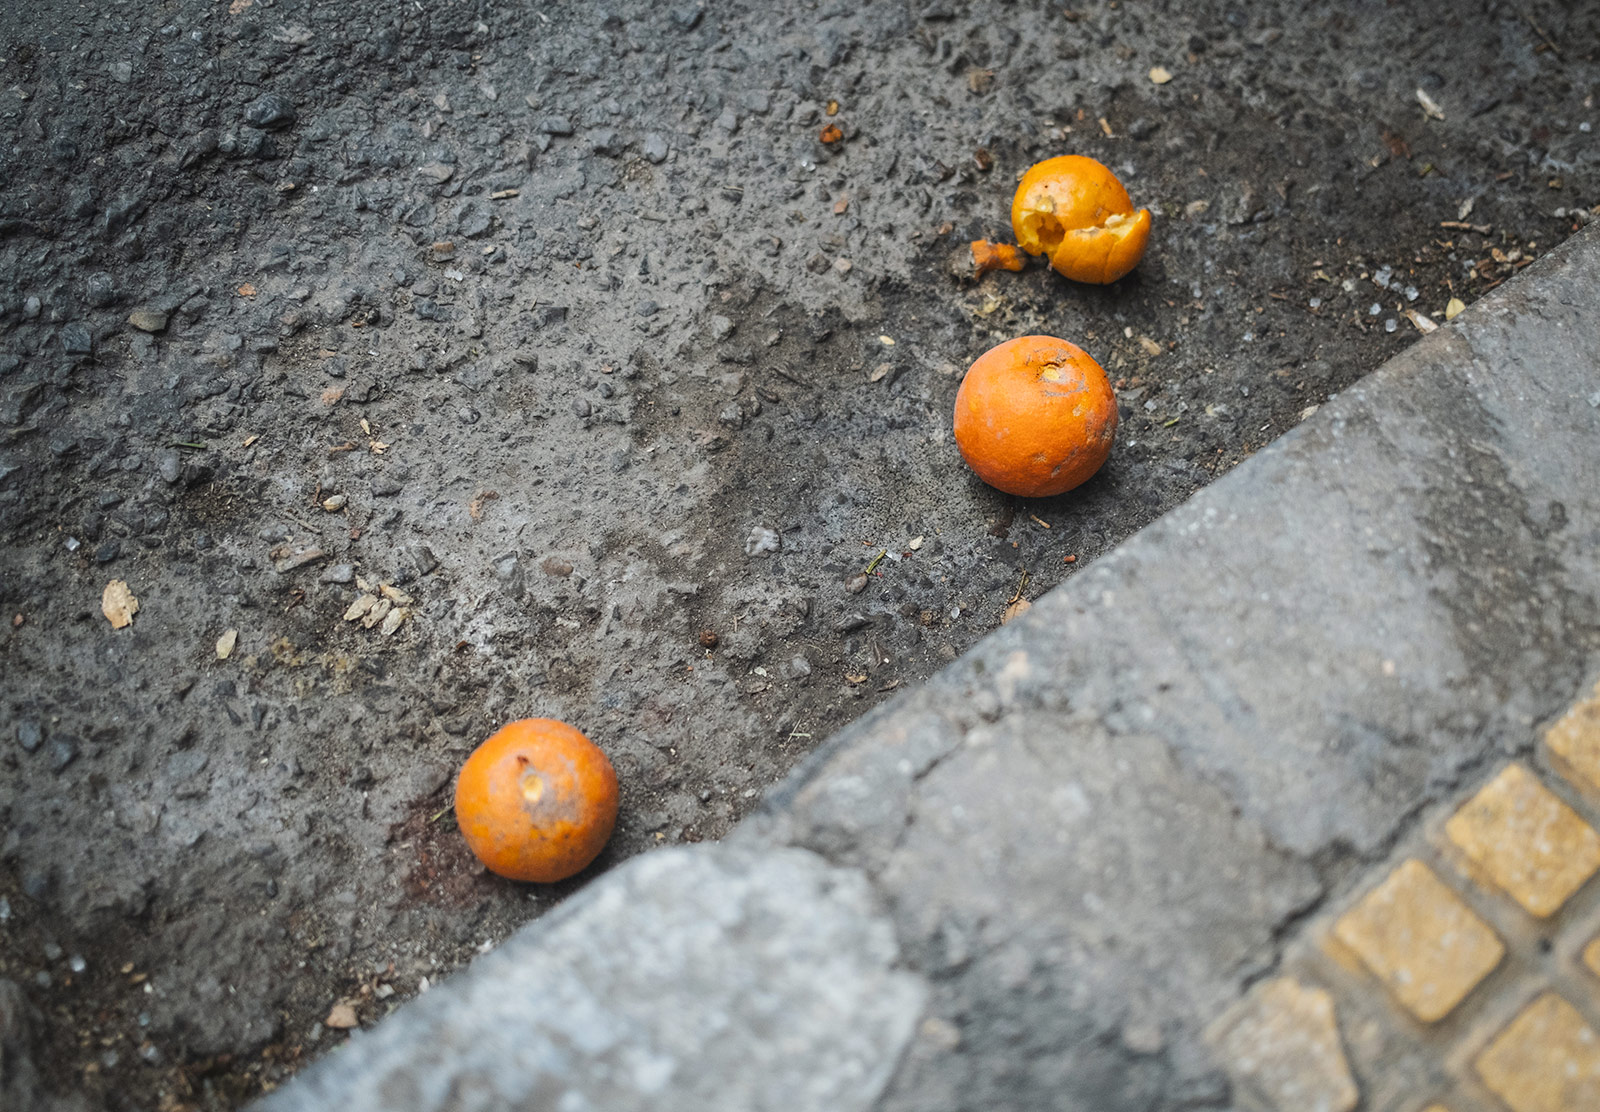 Fallen oranges on the road